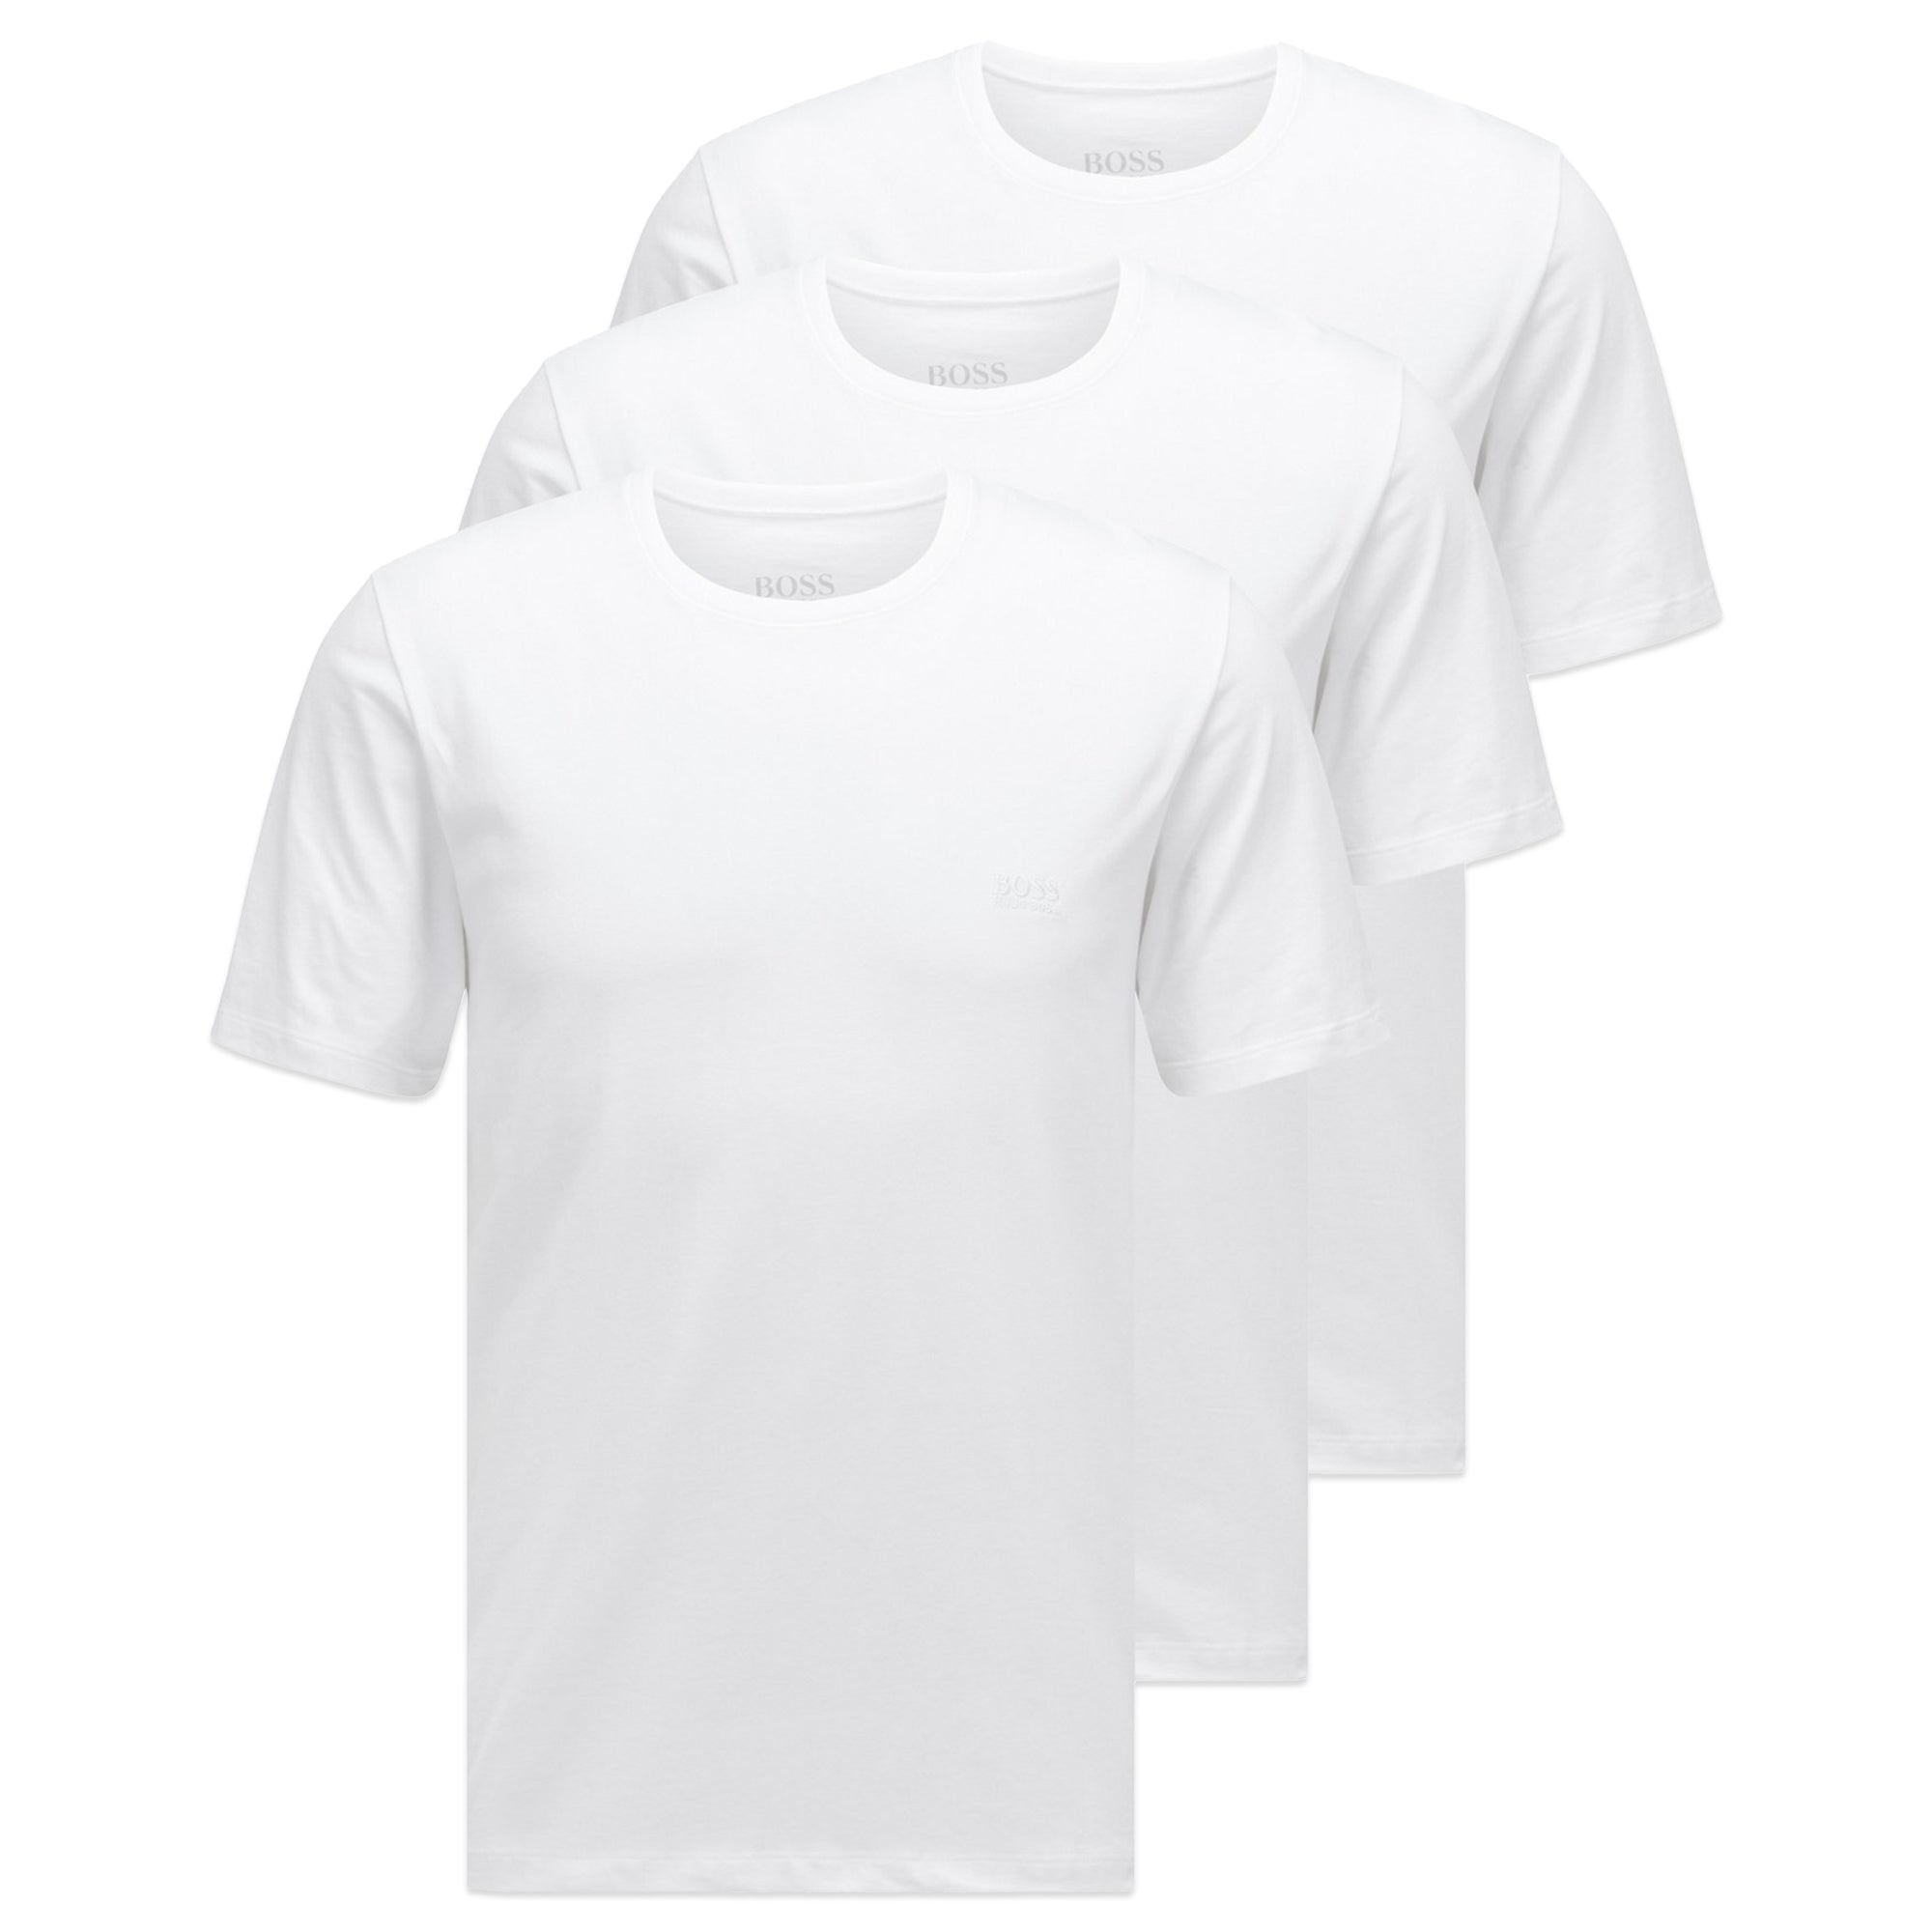 Boss 3 Pack Cotton T-Shirts - White